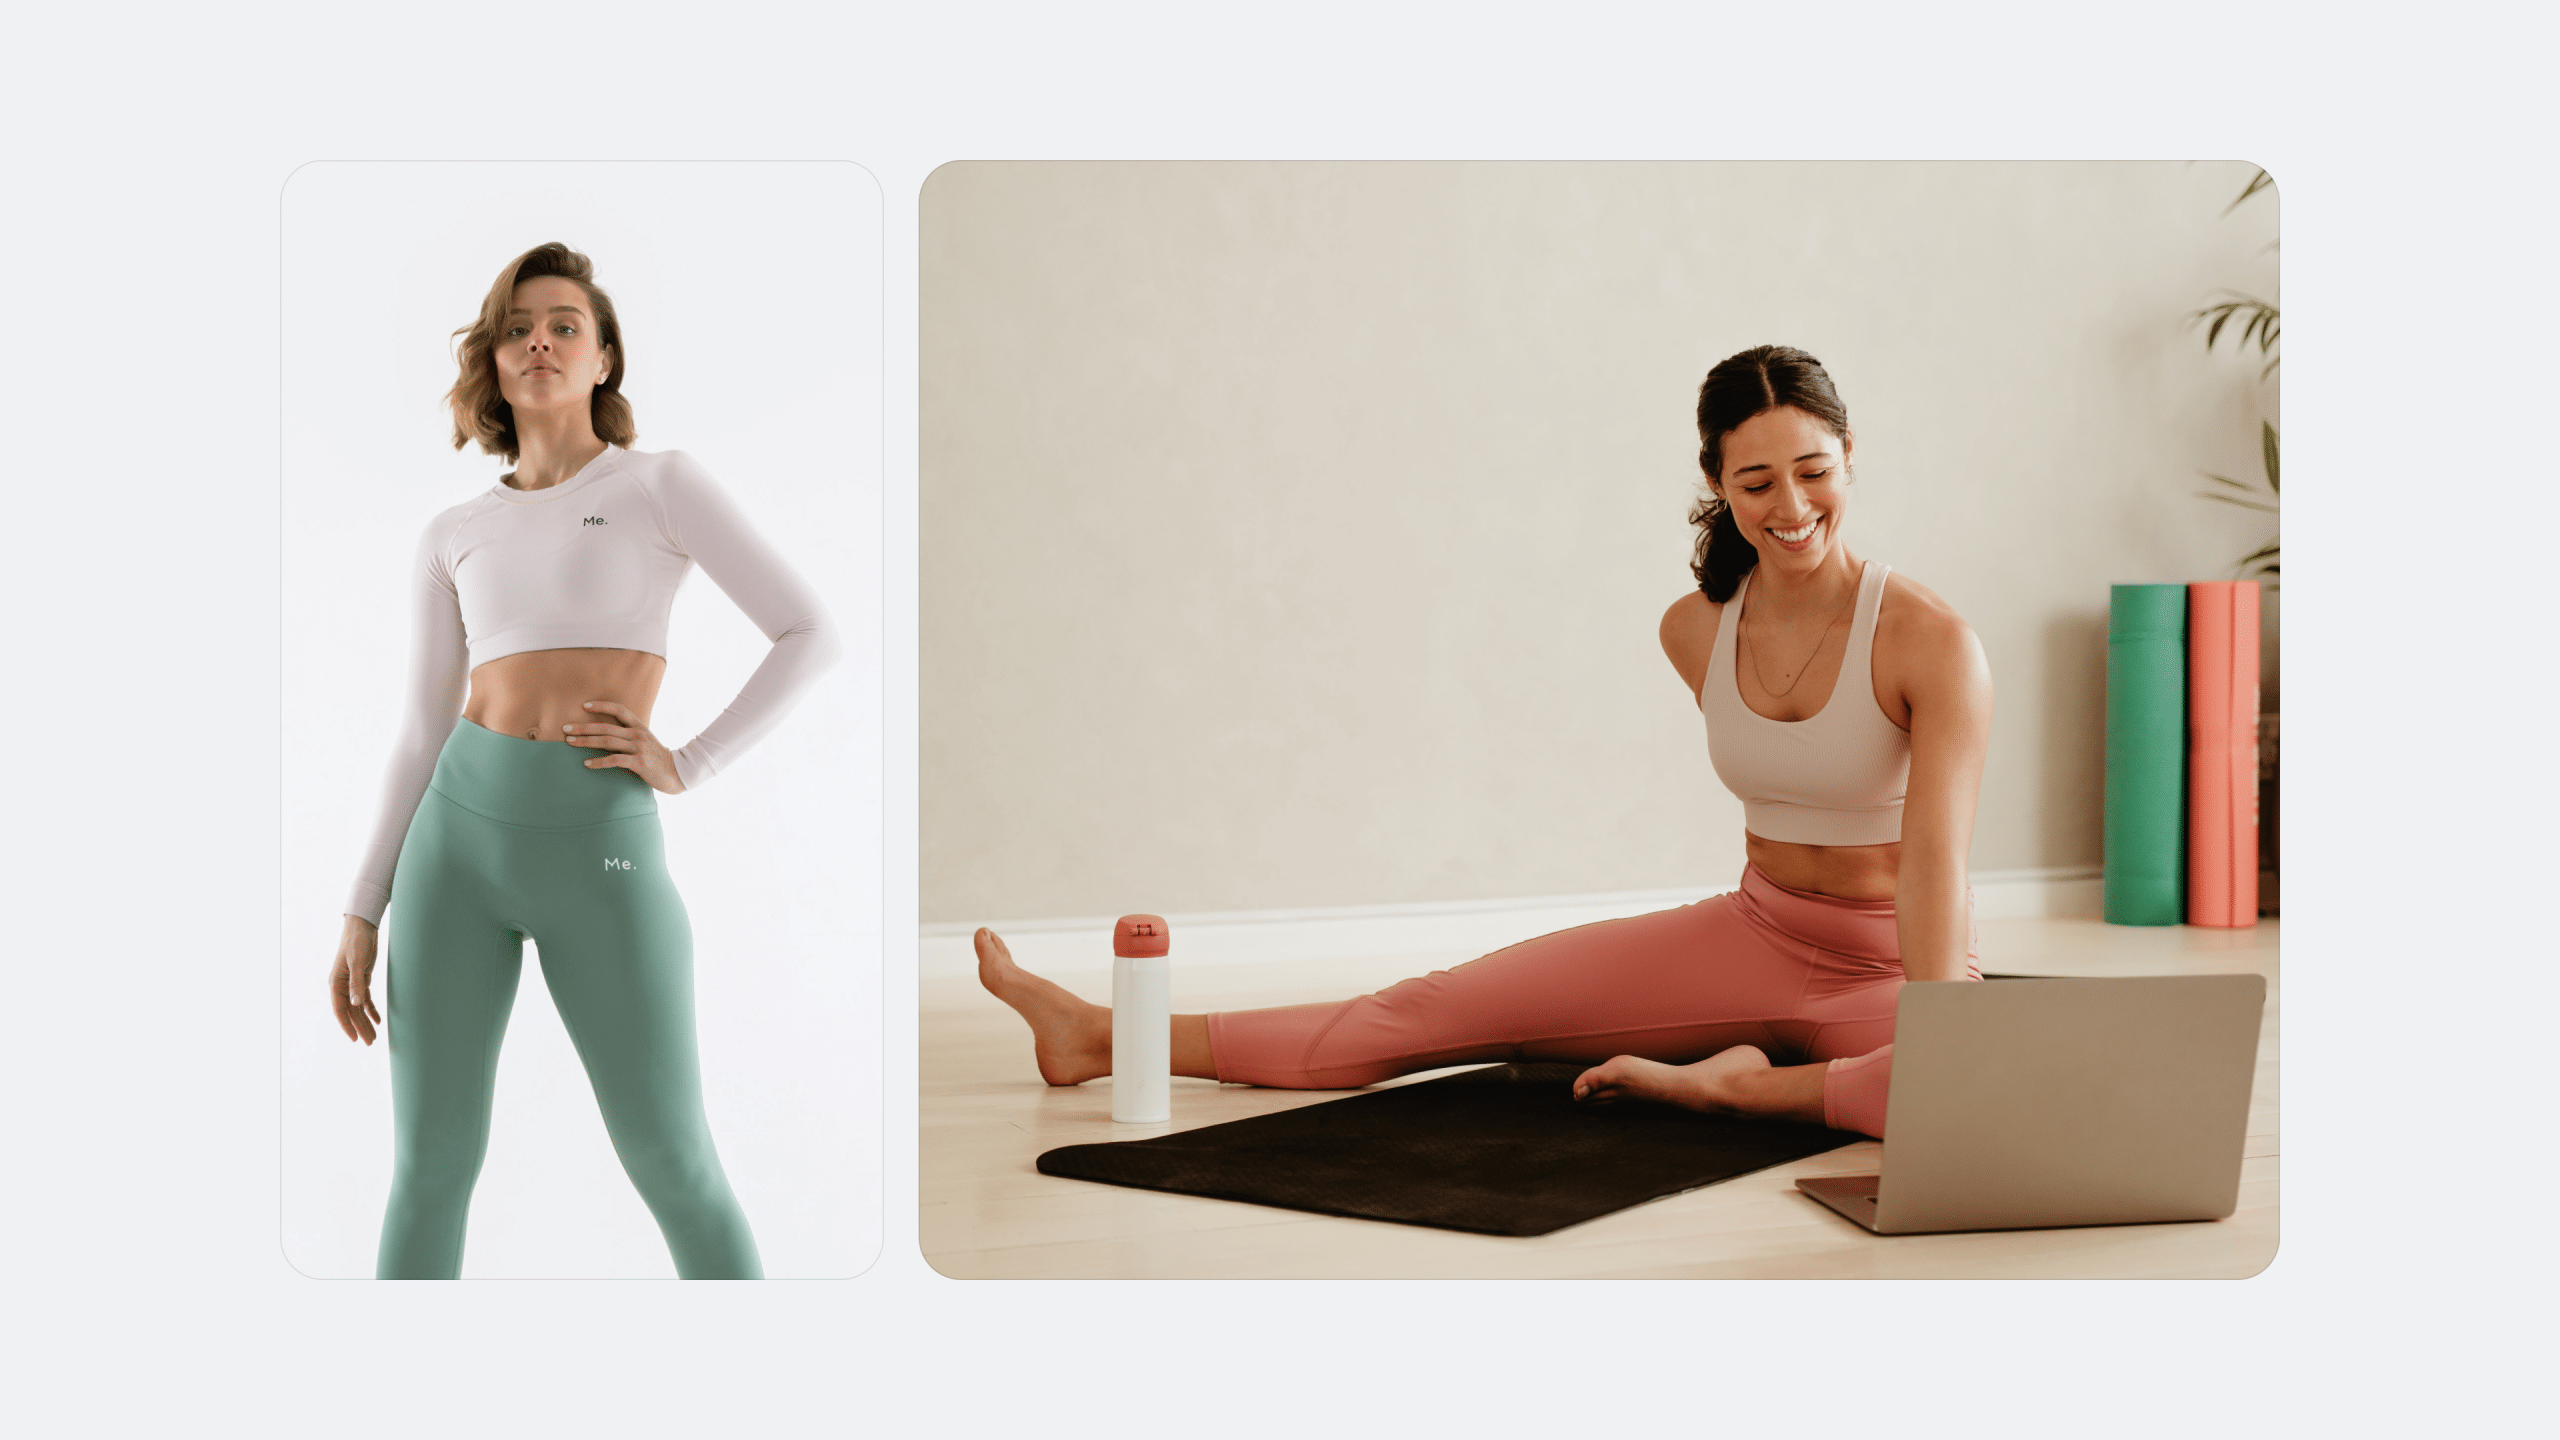 HD wallpaper: women, model, fitness model, yoga, pilates